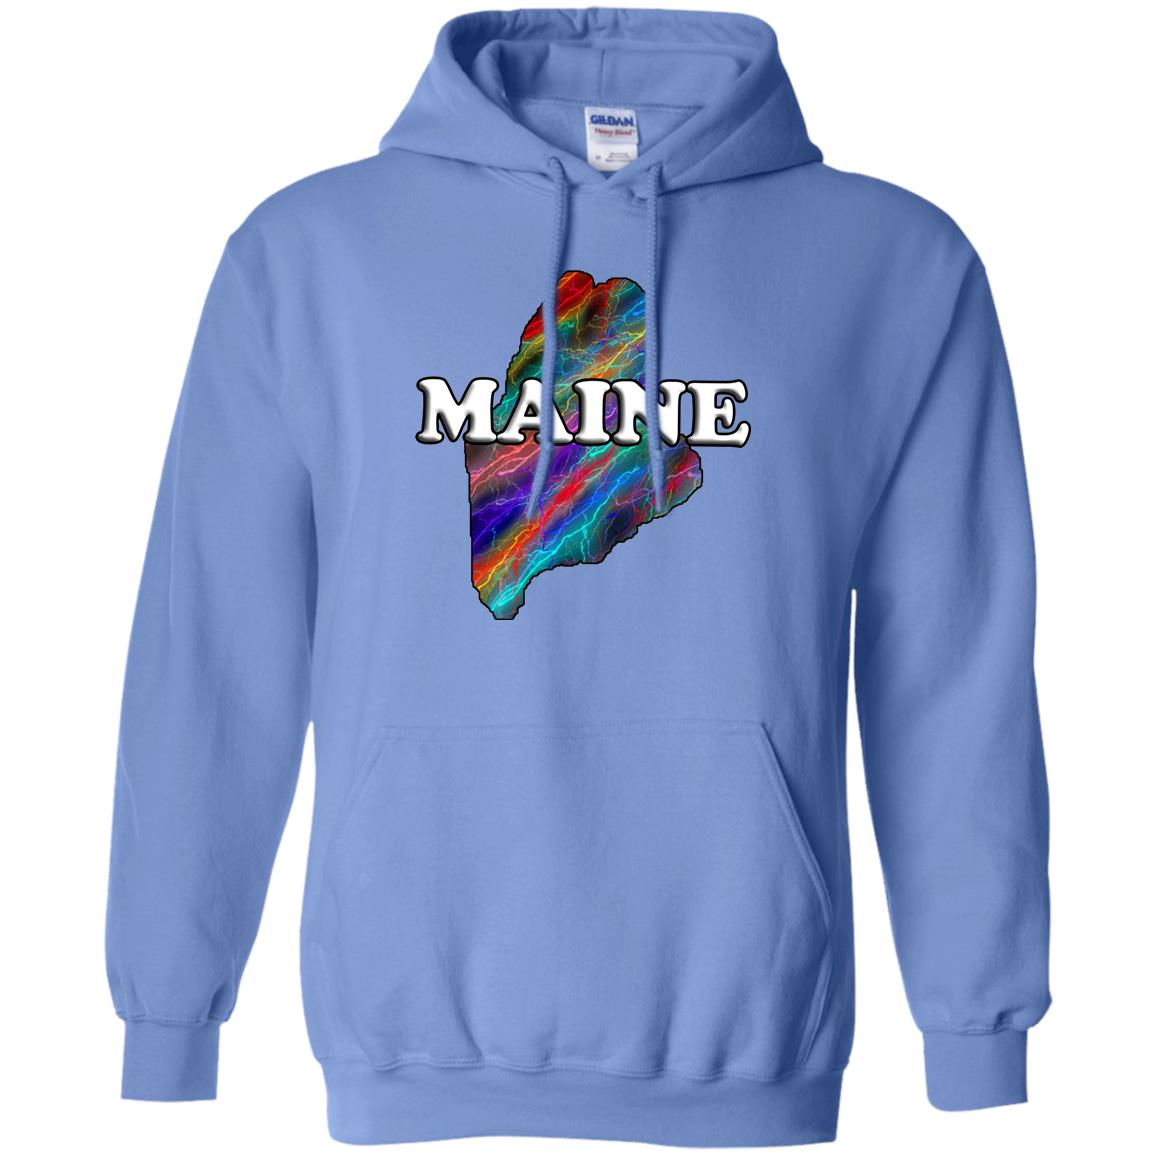 Maine State Hoodie